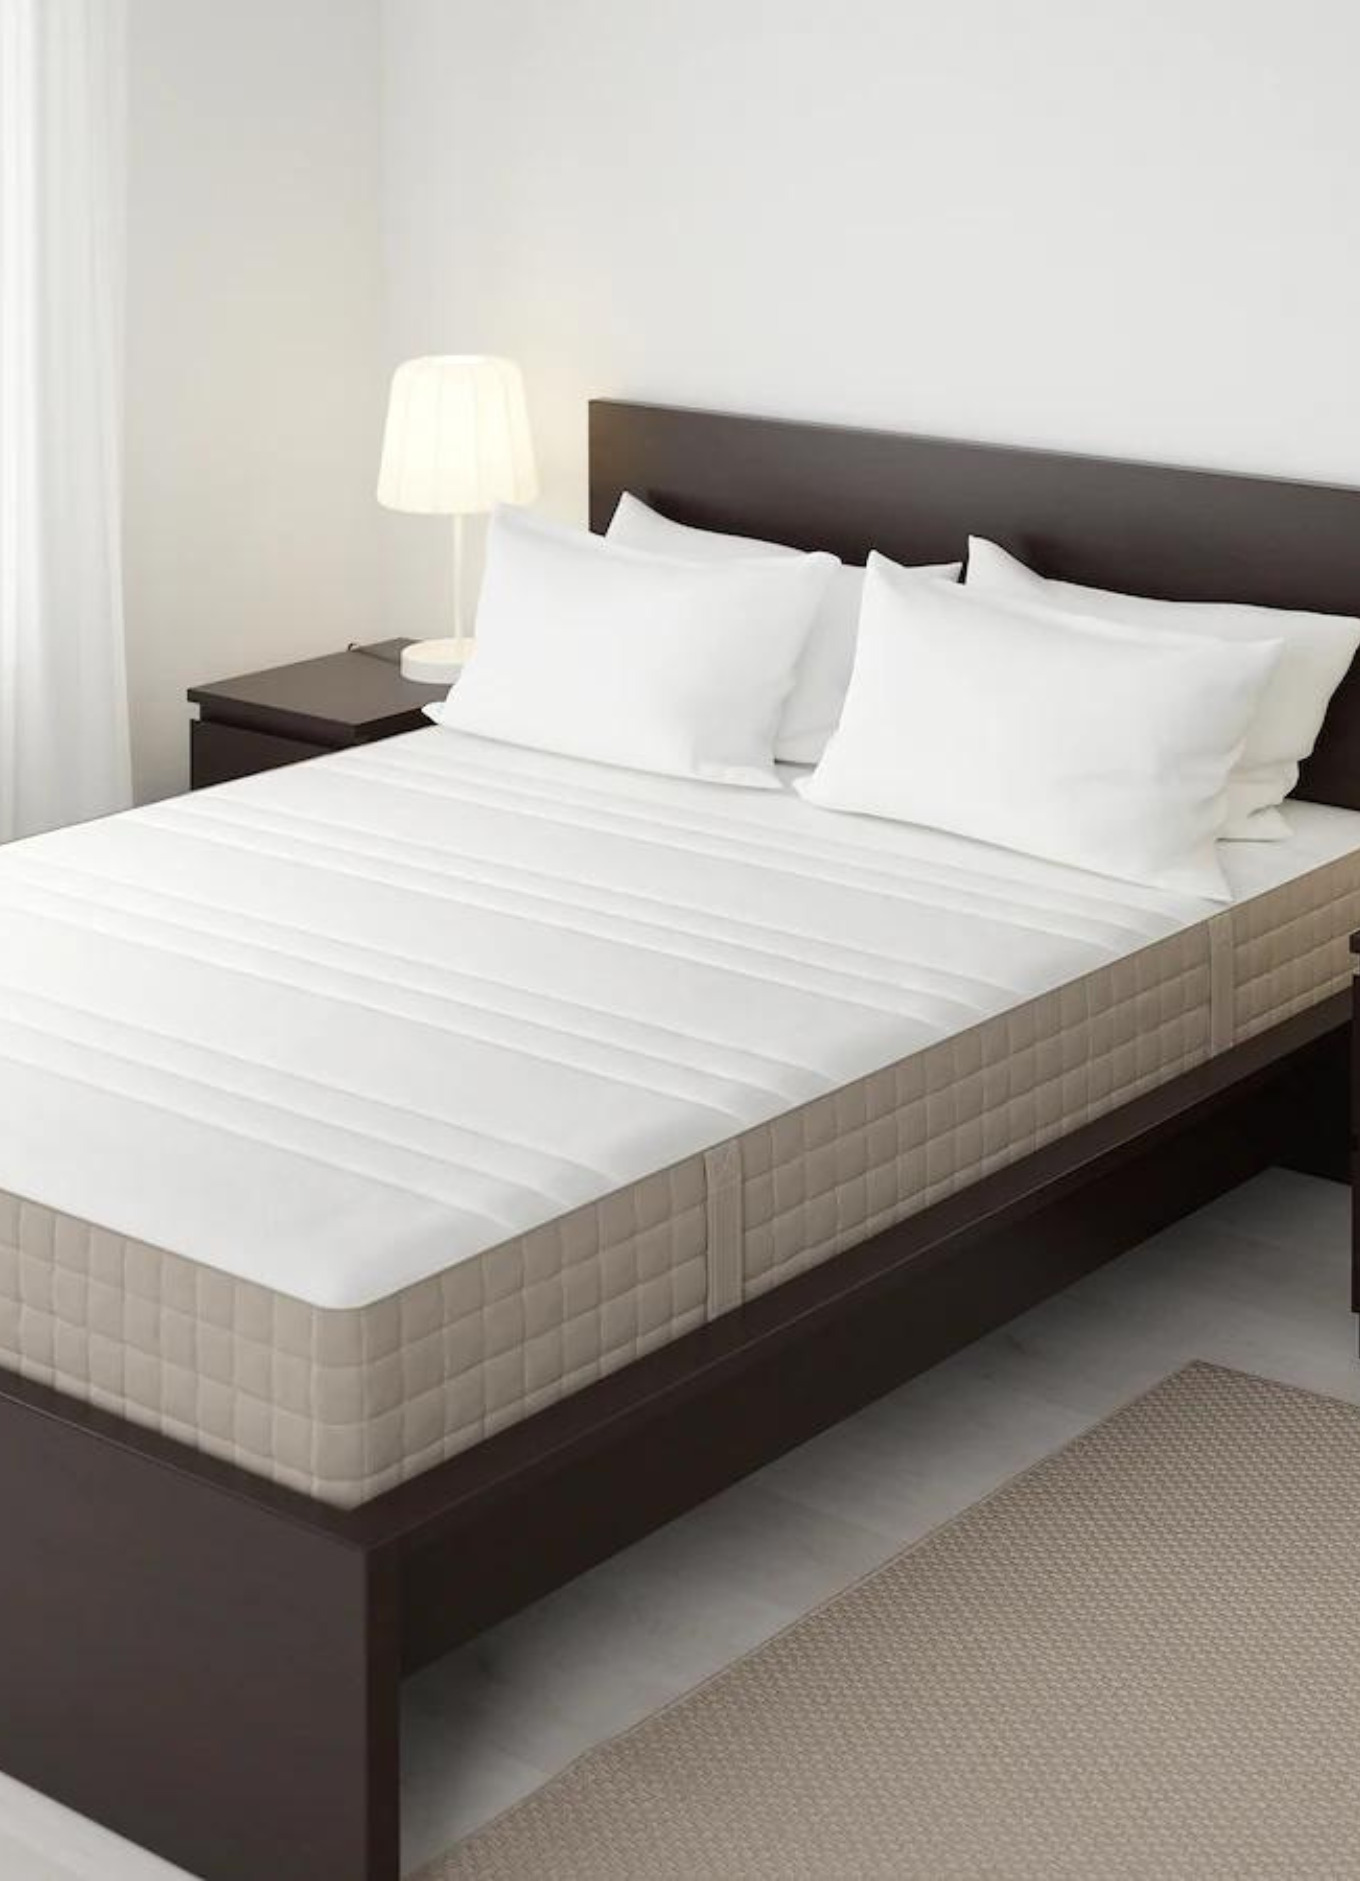 Photo shows bed with an Ikea Haugesund mattress on top